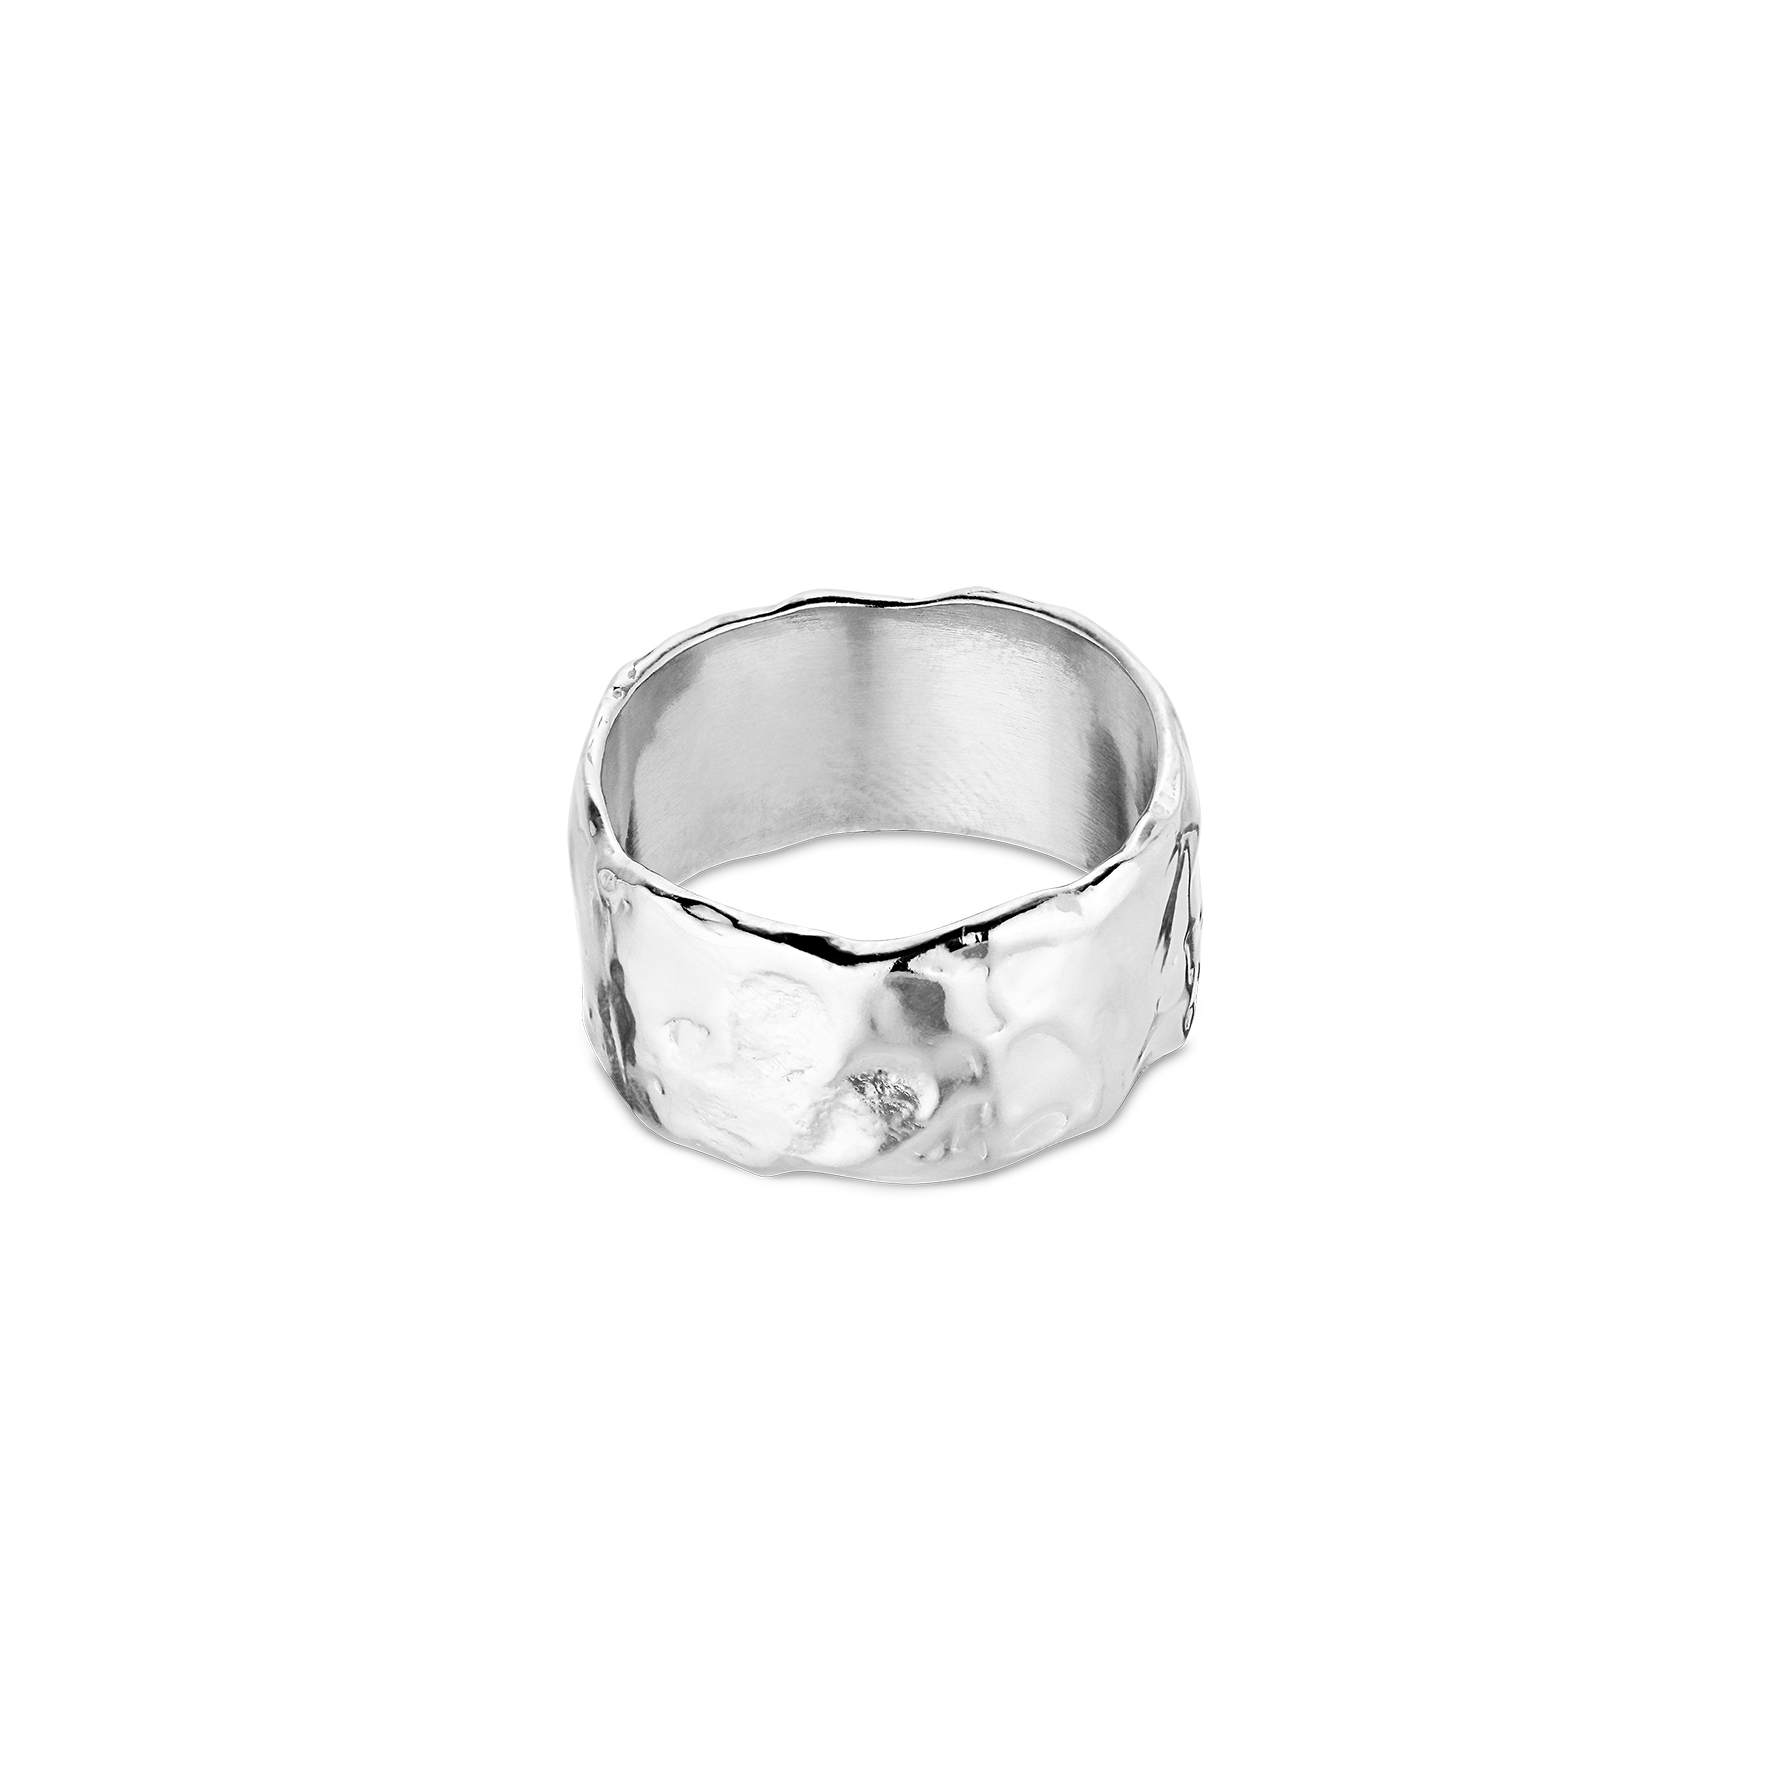 Bruised Heart Ring von Jane Kønig in Silber Sterling 925